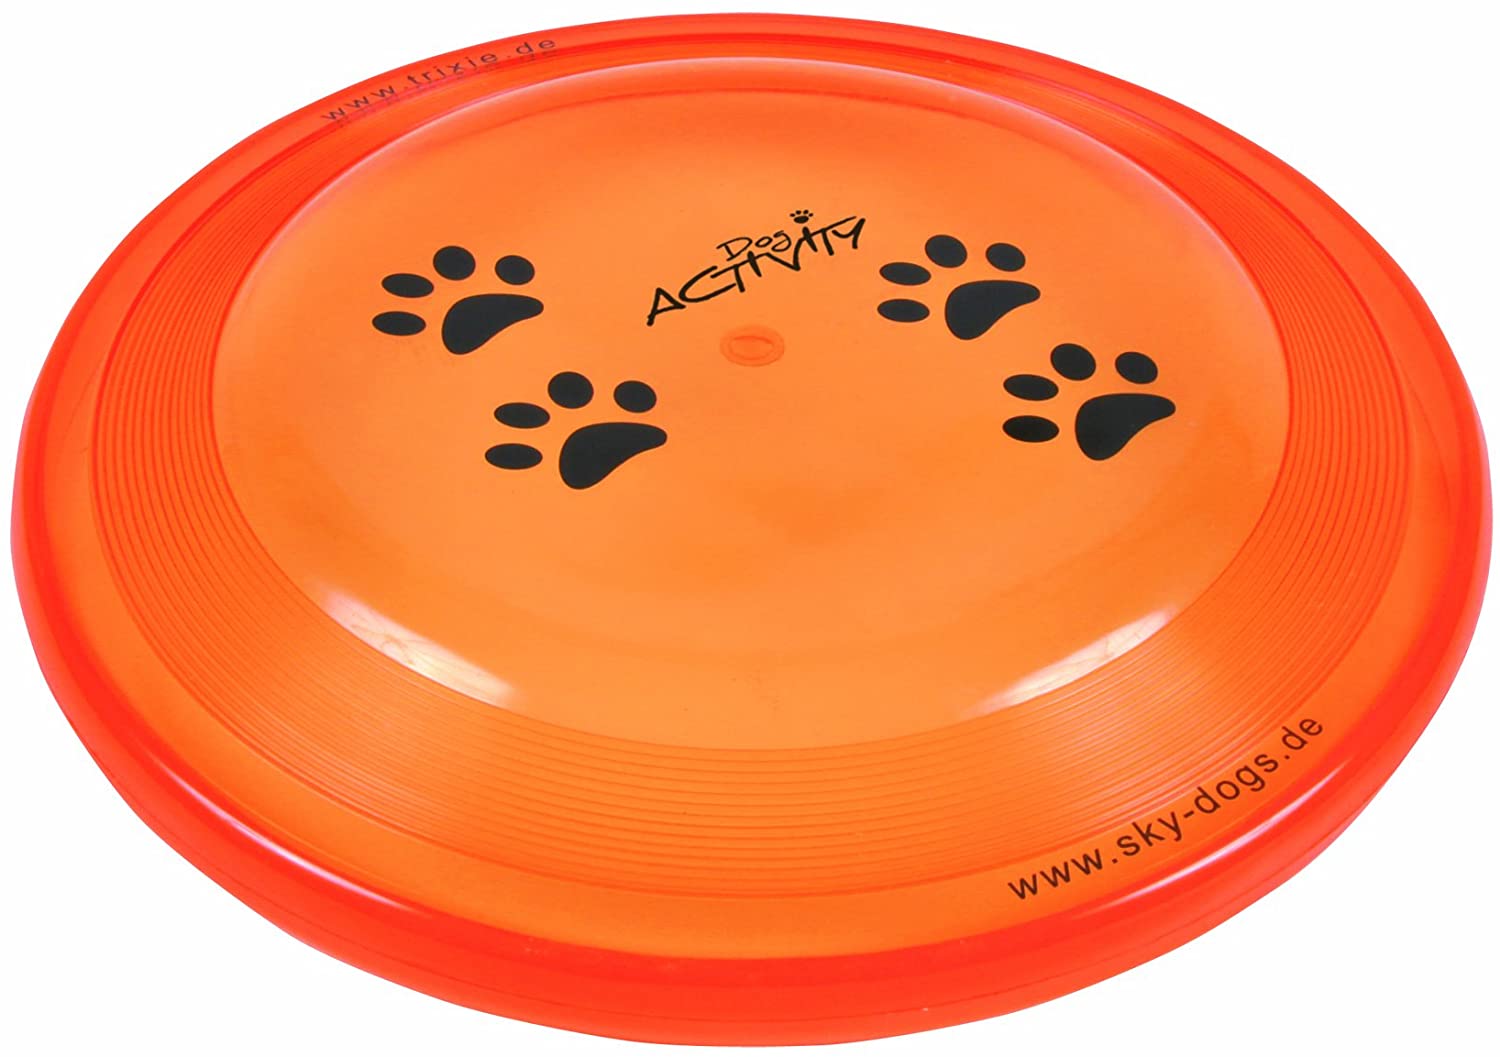  Trixie Disc Dog Activity, Plást. Extra Resistente,ø23 cm 